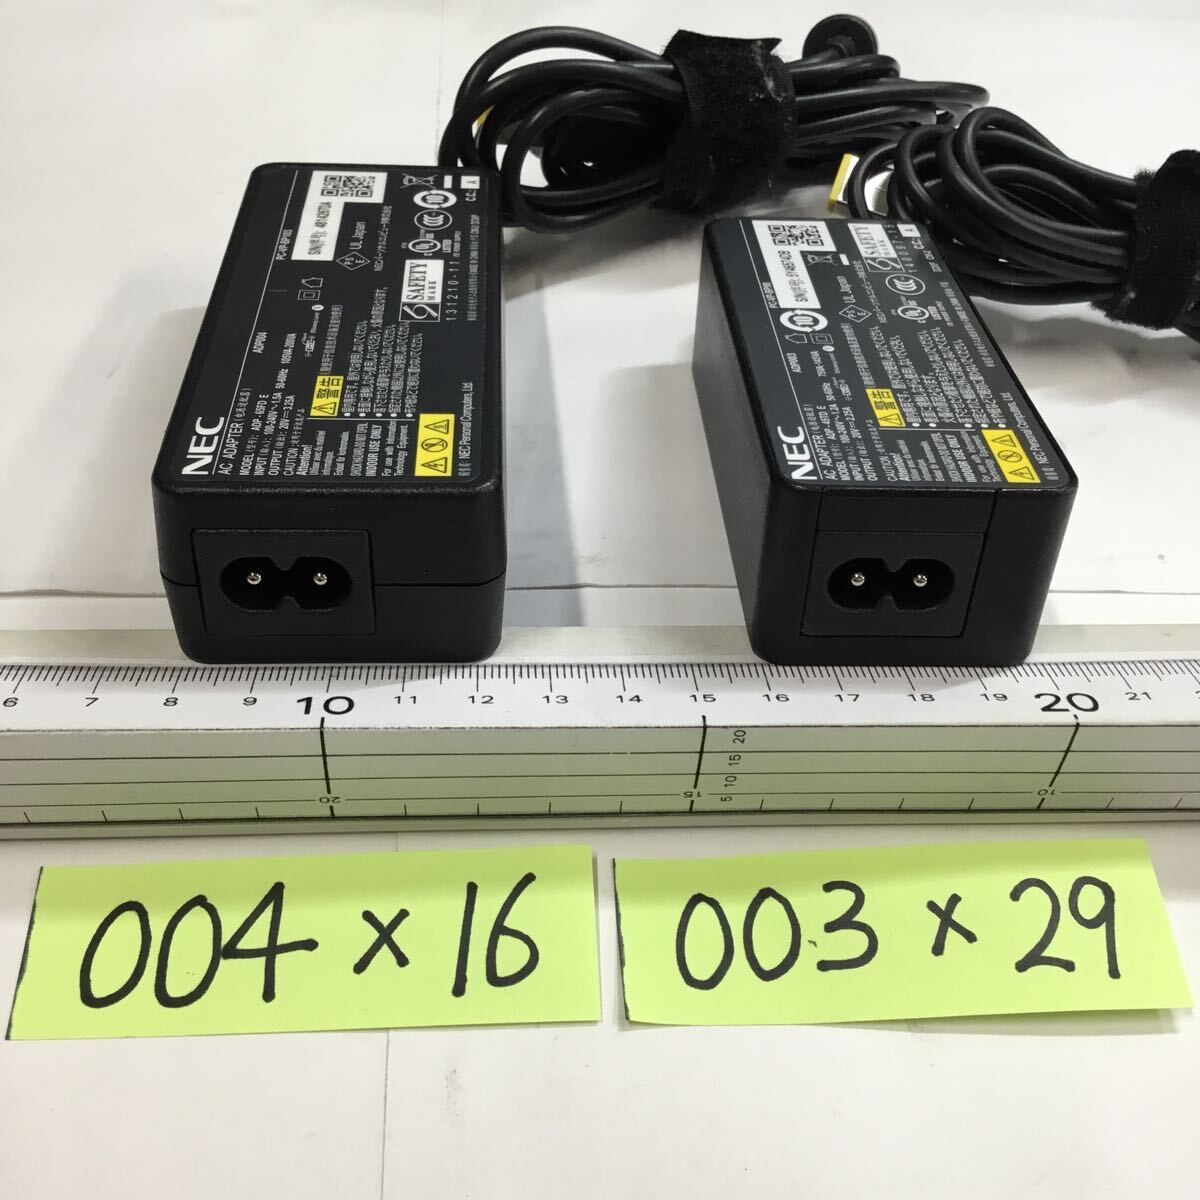 (0508HR06) free shipping / used /NEC/ADP004/20V/3.25A*ADP003/20V/2.25A/ original AC adapter 45 piece set 